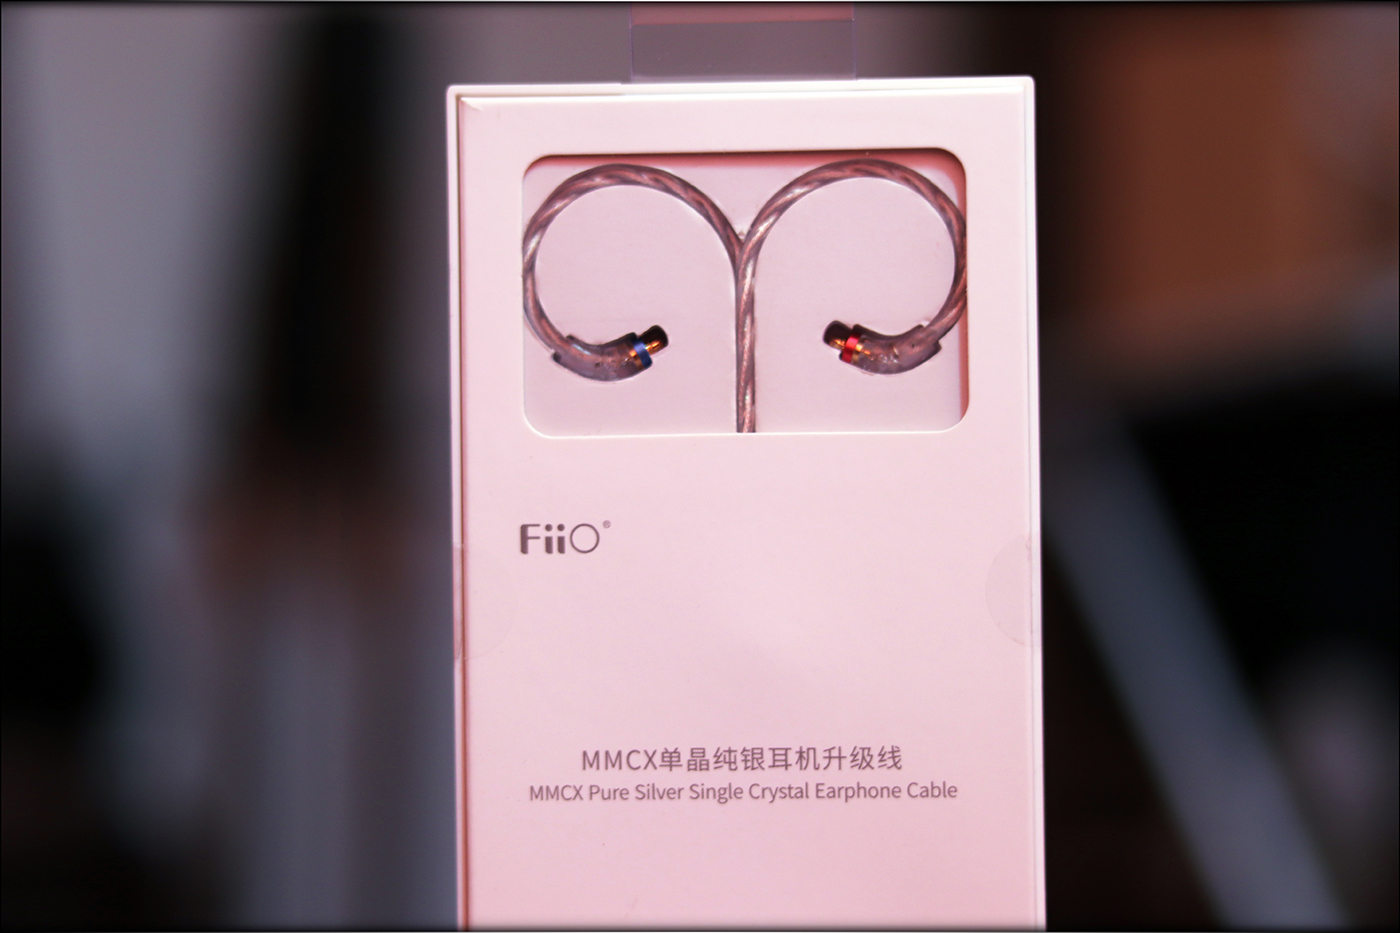 FiiO-FA7-MMCX-IEMs-Silver-Cable-Modular-5-Drivers-BA-Dynamic-Flagship-Review-In-Depth-Earphones-IEMs-Audiophile-Heaven-02.jpg